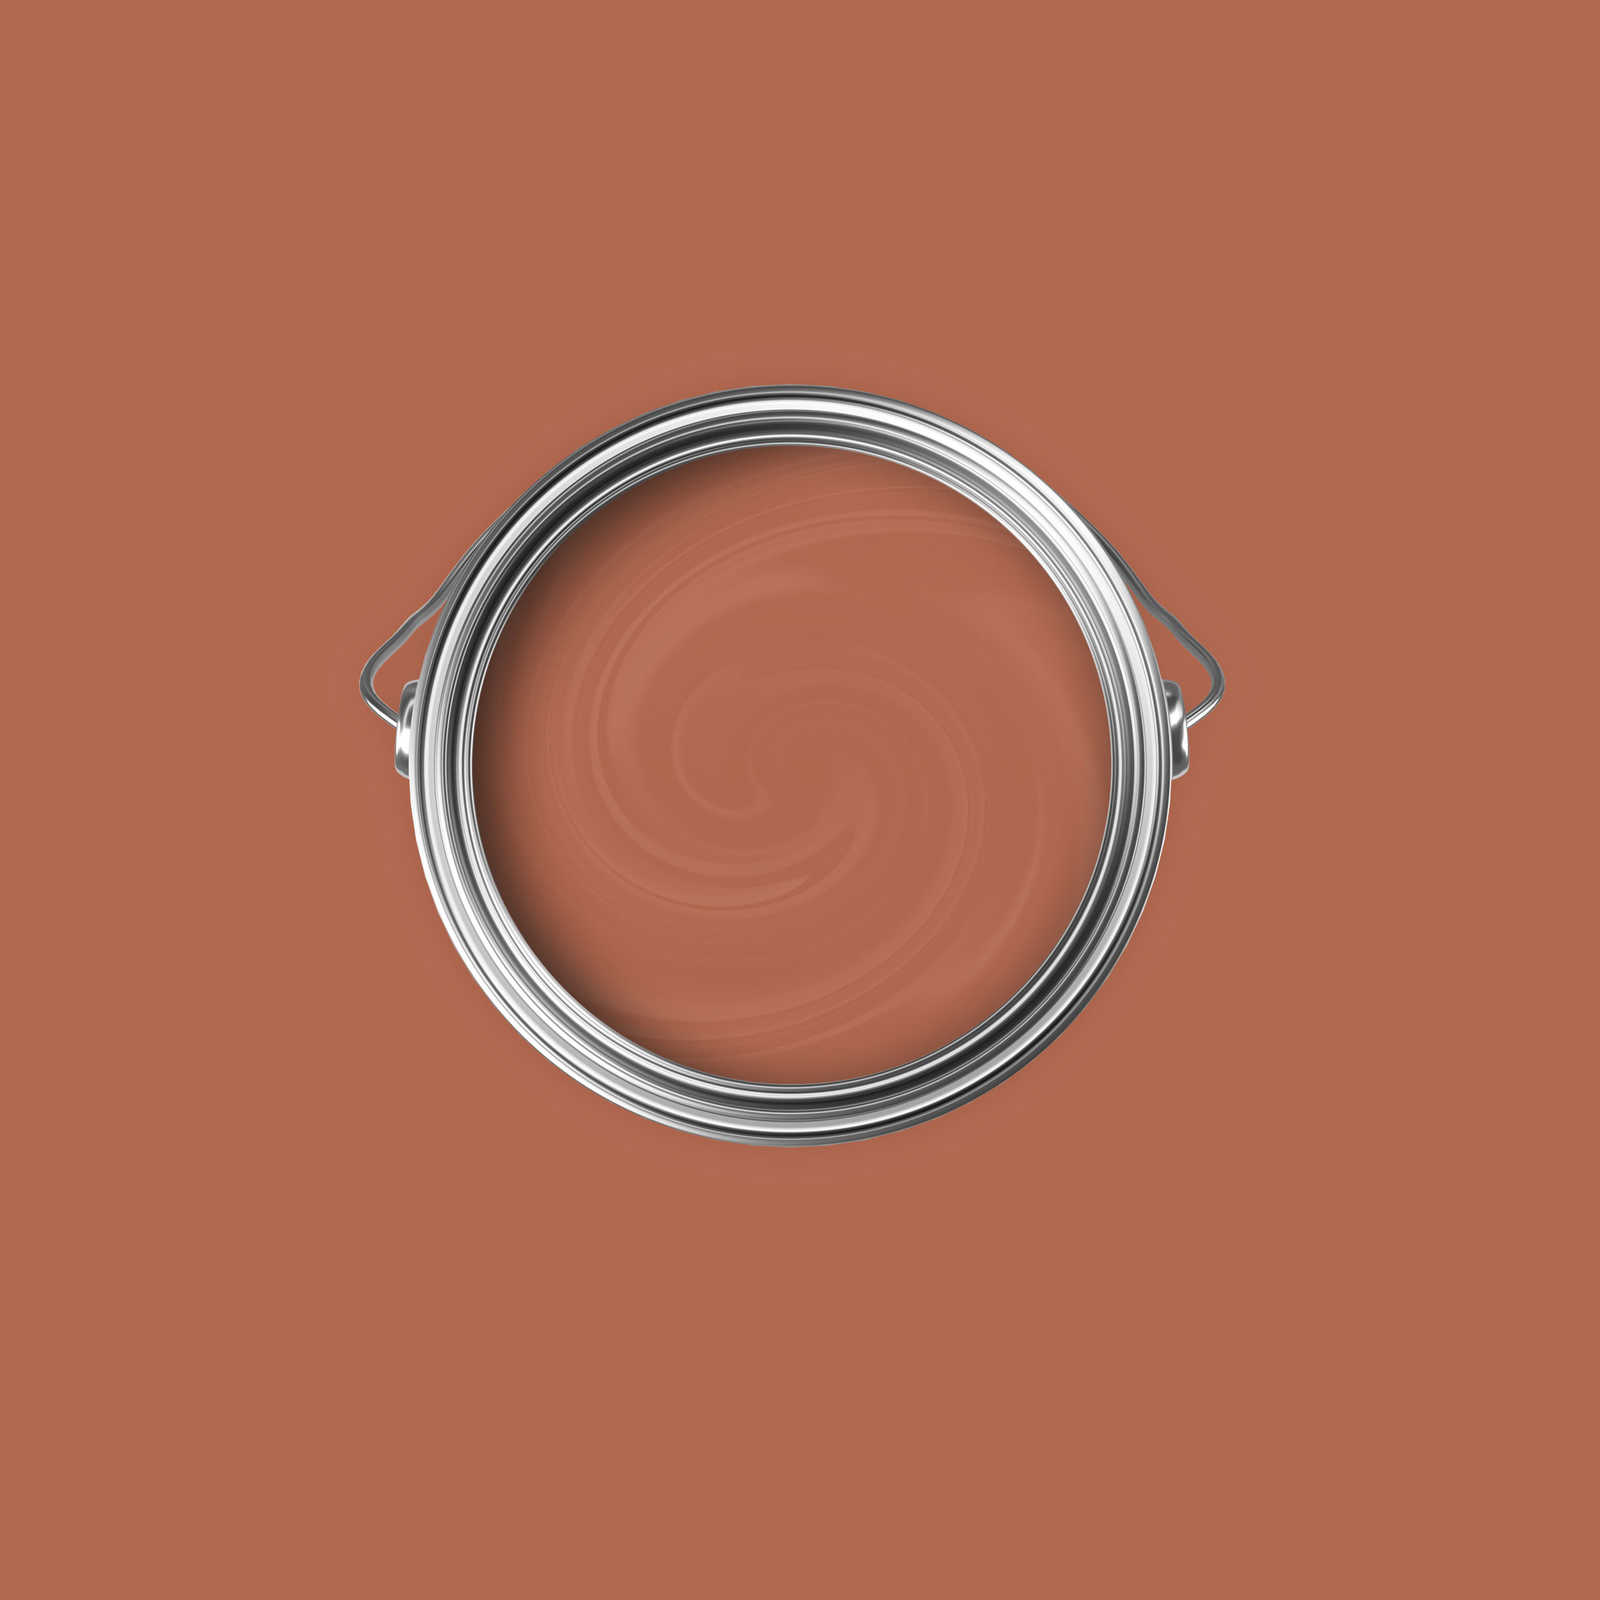             Premium Muurverf Sensitive Terracotta »Pretty Peach« NW908 – 2,5 Liter
        